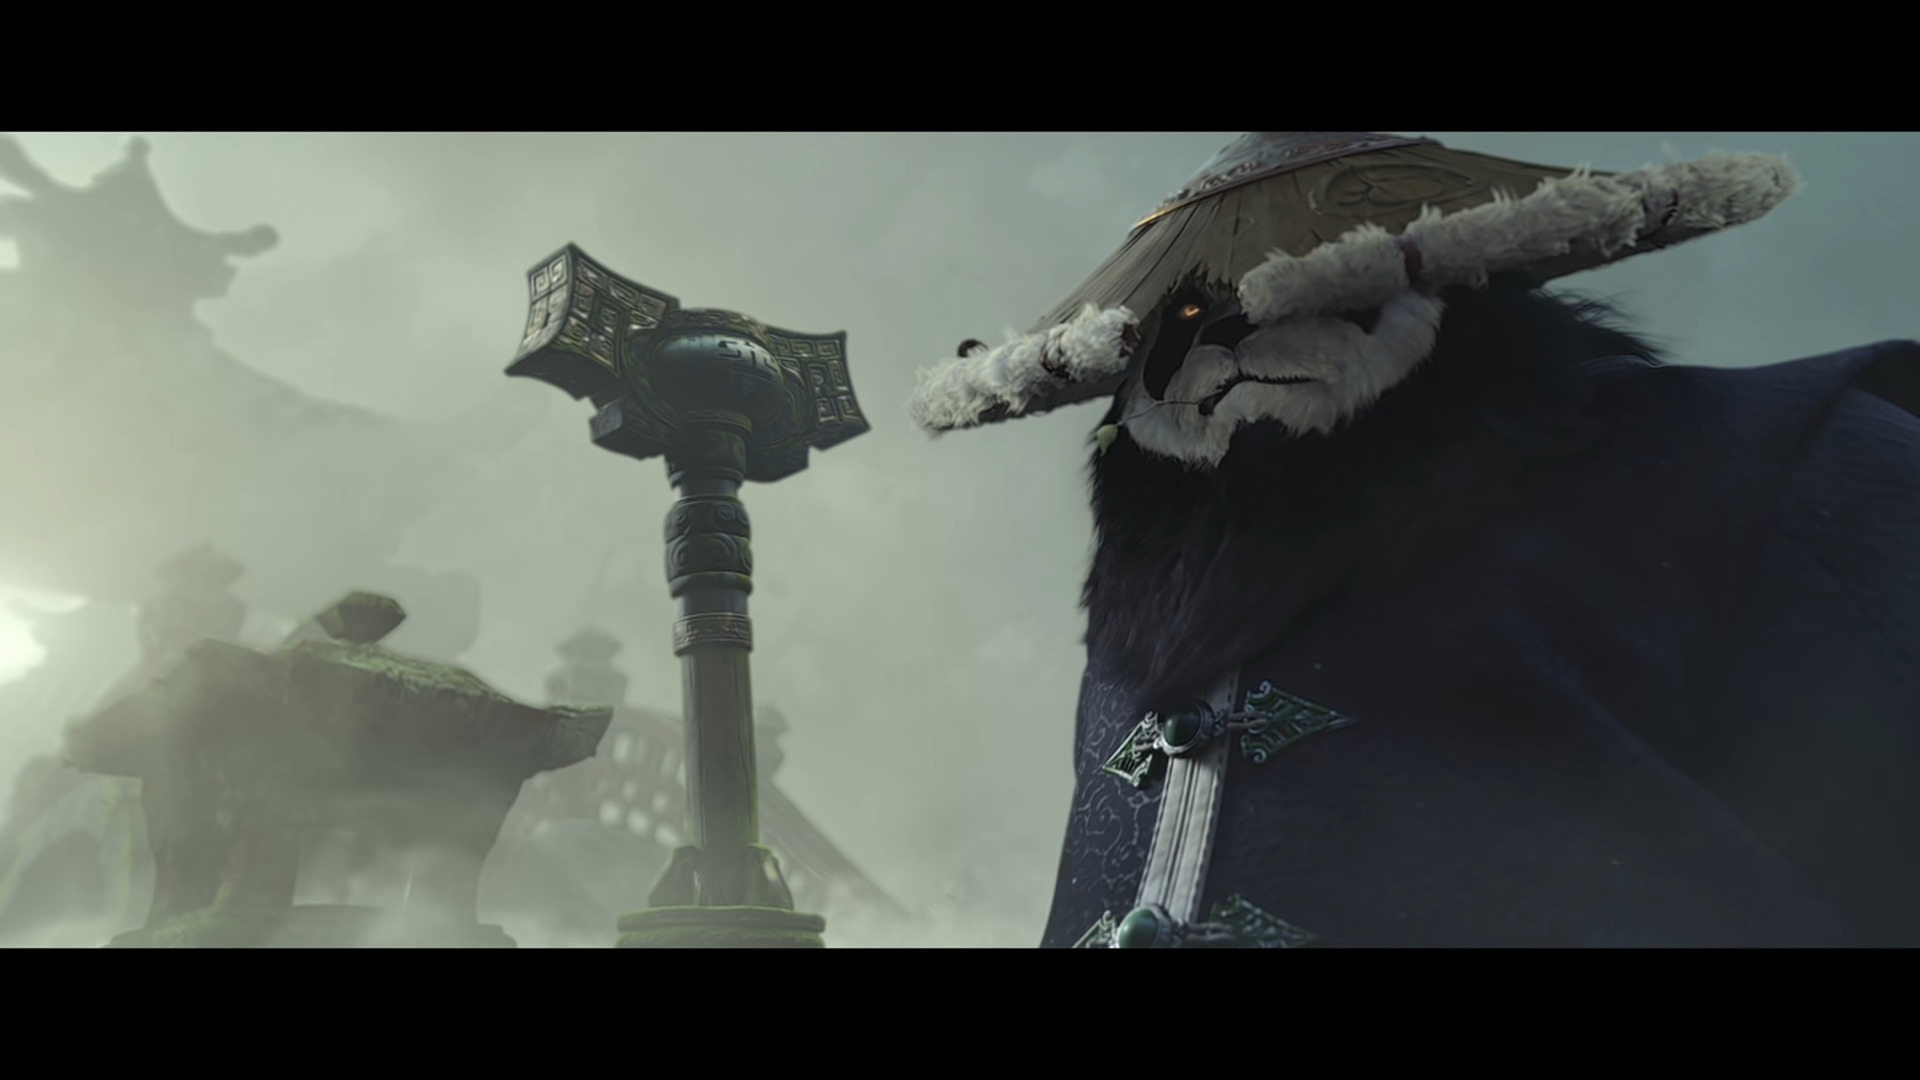 A native pandaren makes himself known through the mist via World of Warcraft: Mists of Pandaria (2012), Blizzard Entertainment